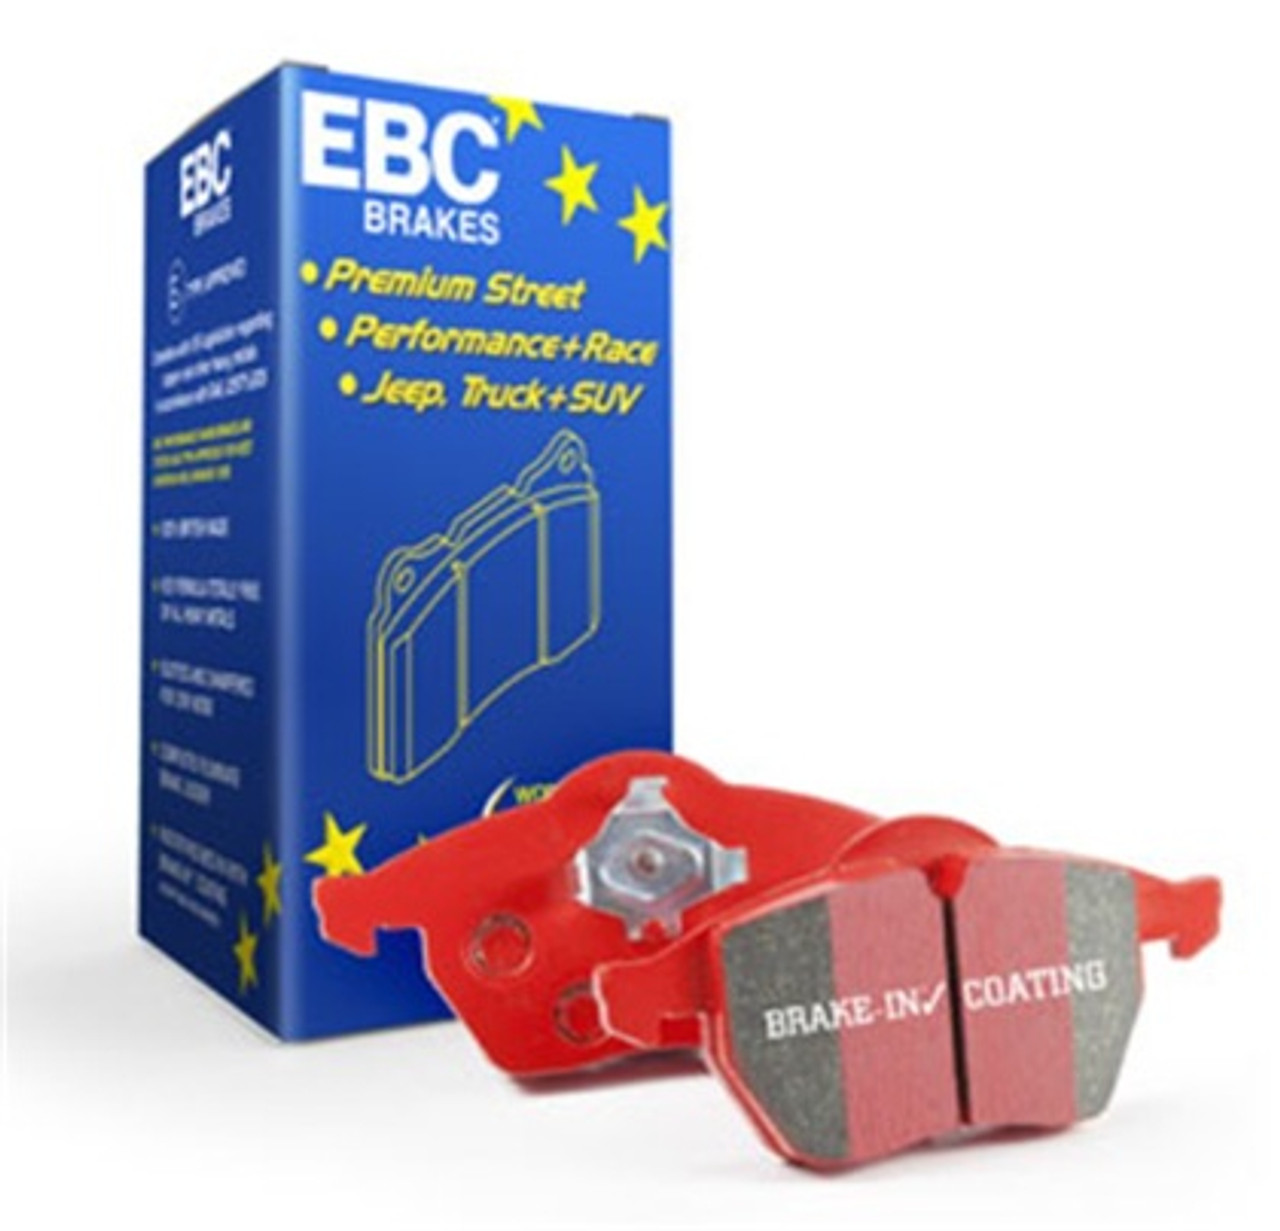 EBC RedStuff Front Brake Pads for B5 S4, C5 A6, S6, Allroad & Passat W8